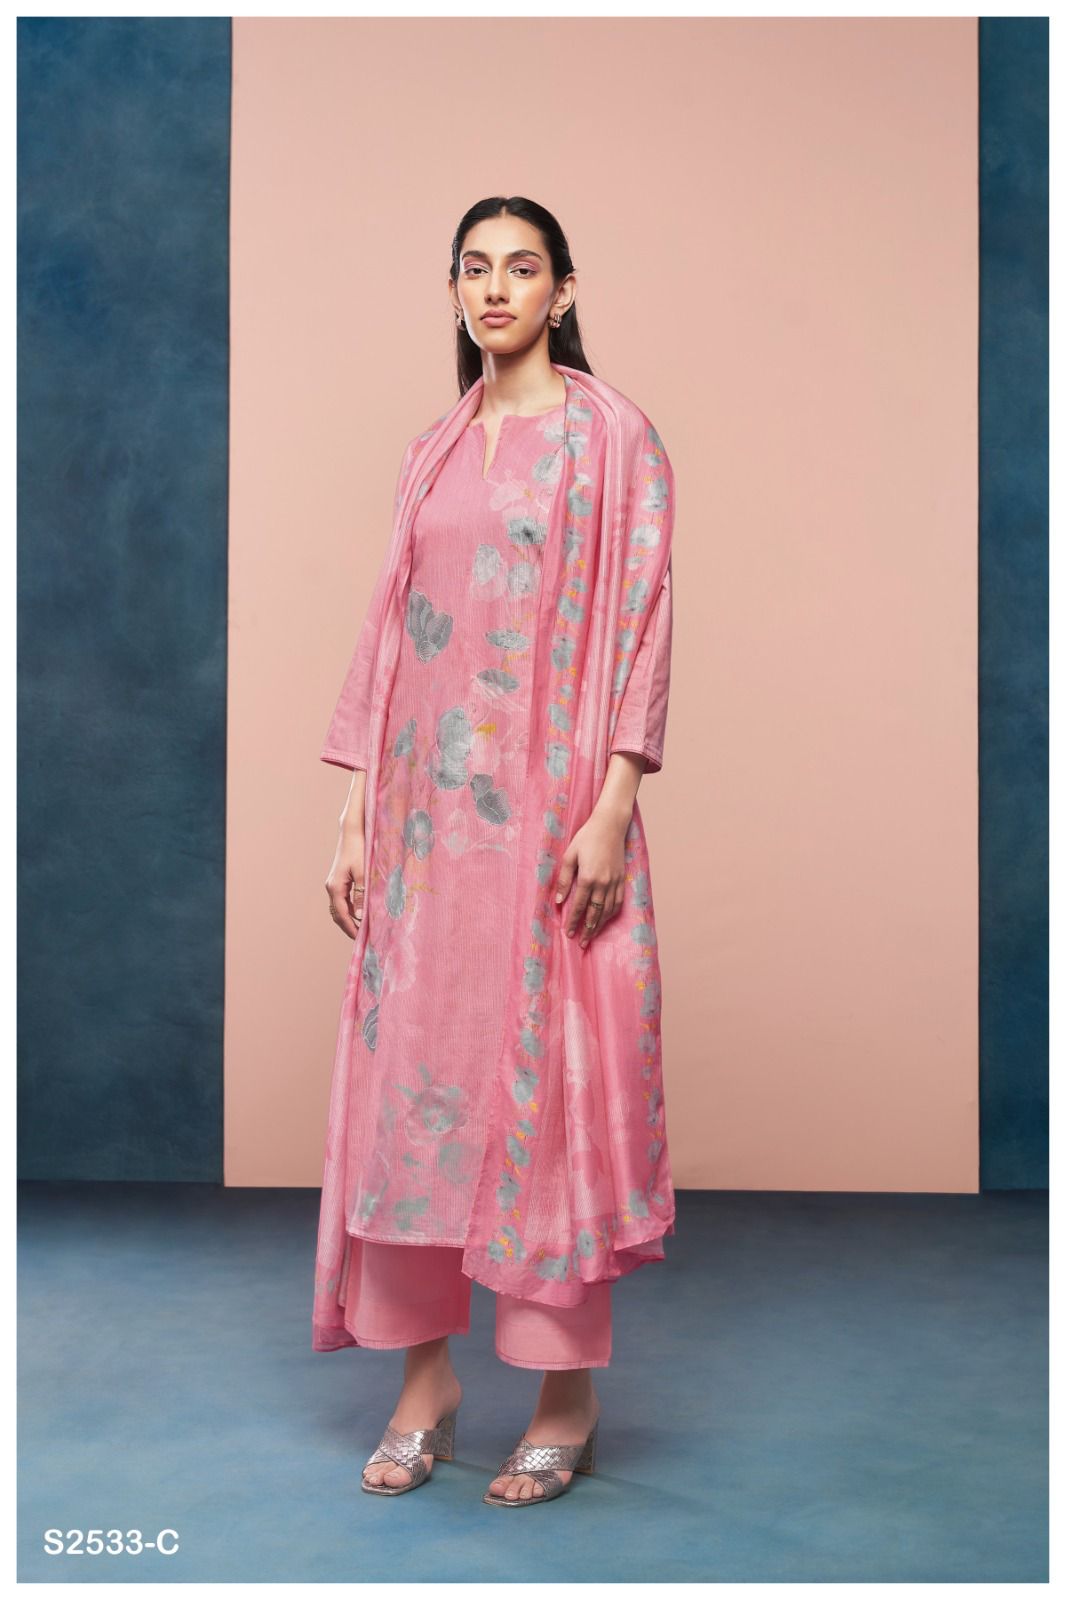 Pieta 2533 Ganga Premium Cotton Plazzo Style Suits Manufacturer Ahmedabad